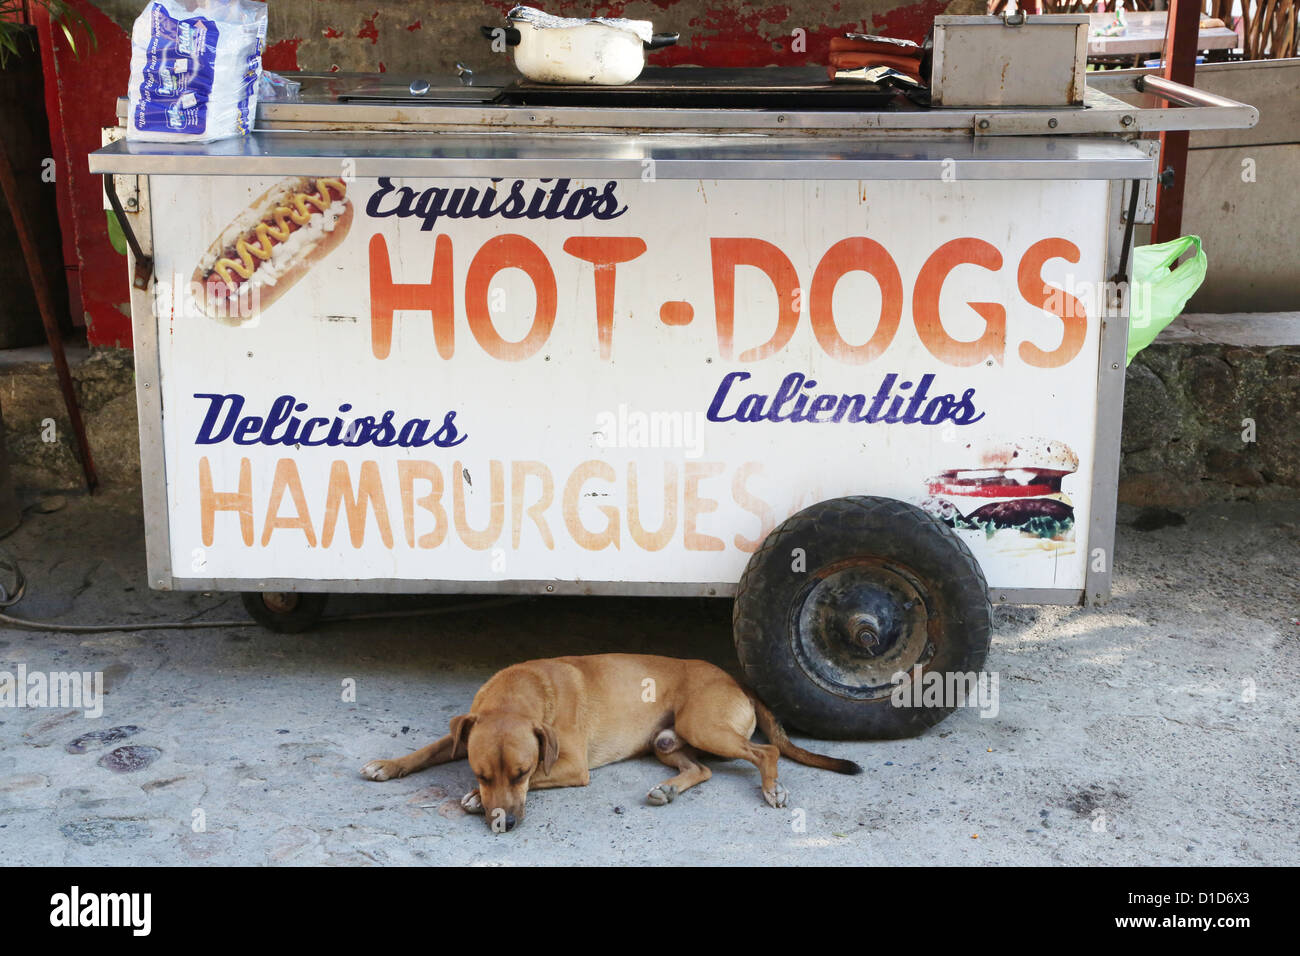 A sleeping dog lying next to a street vendor's hot dog cart. Stock Photo